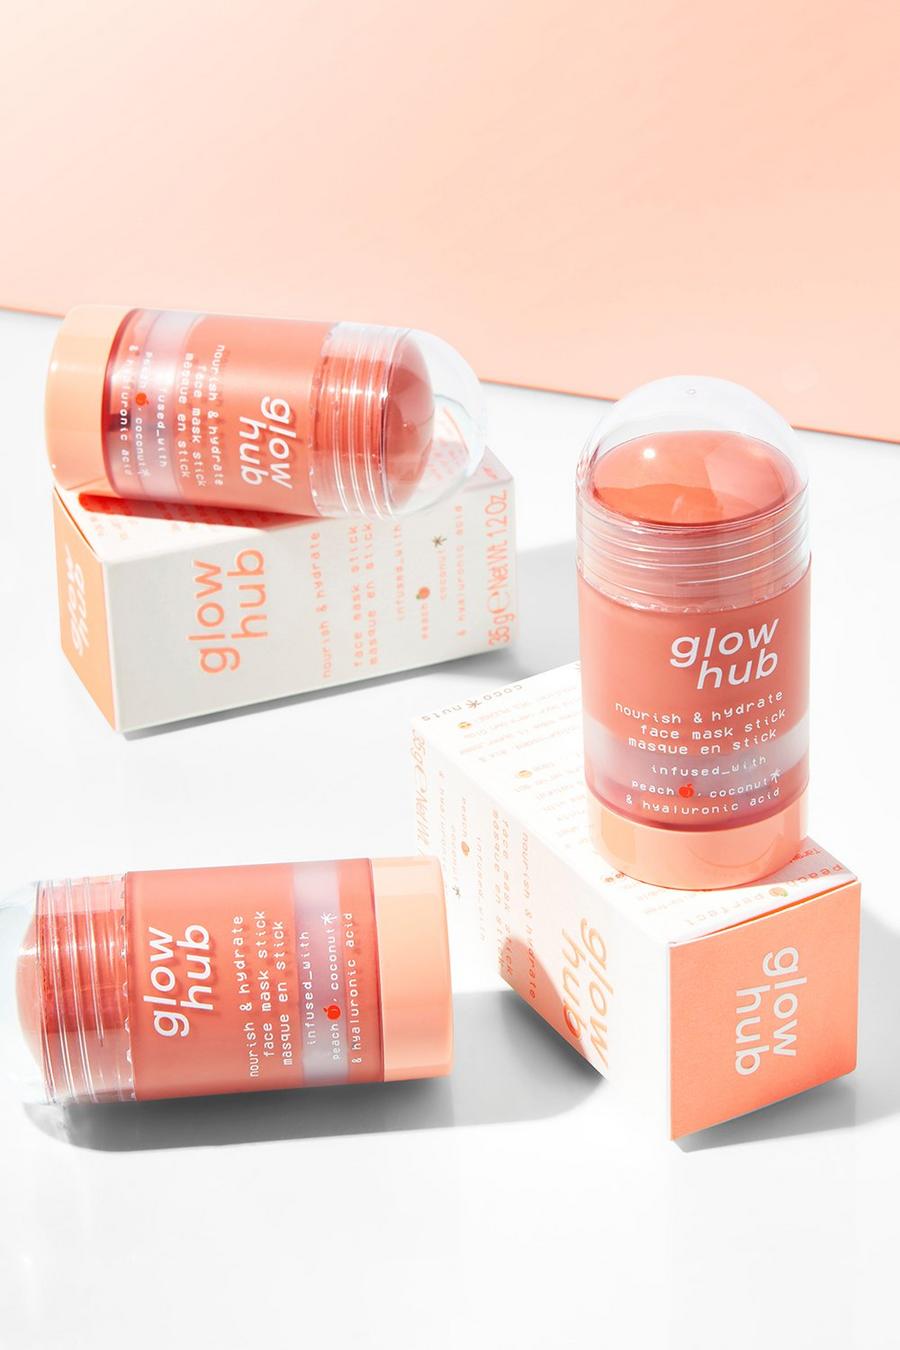 Orange arancio Glow Hub nourish & hydrate face mask stick